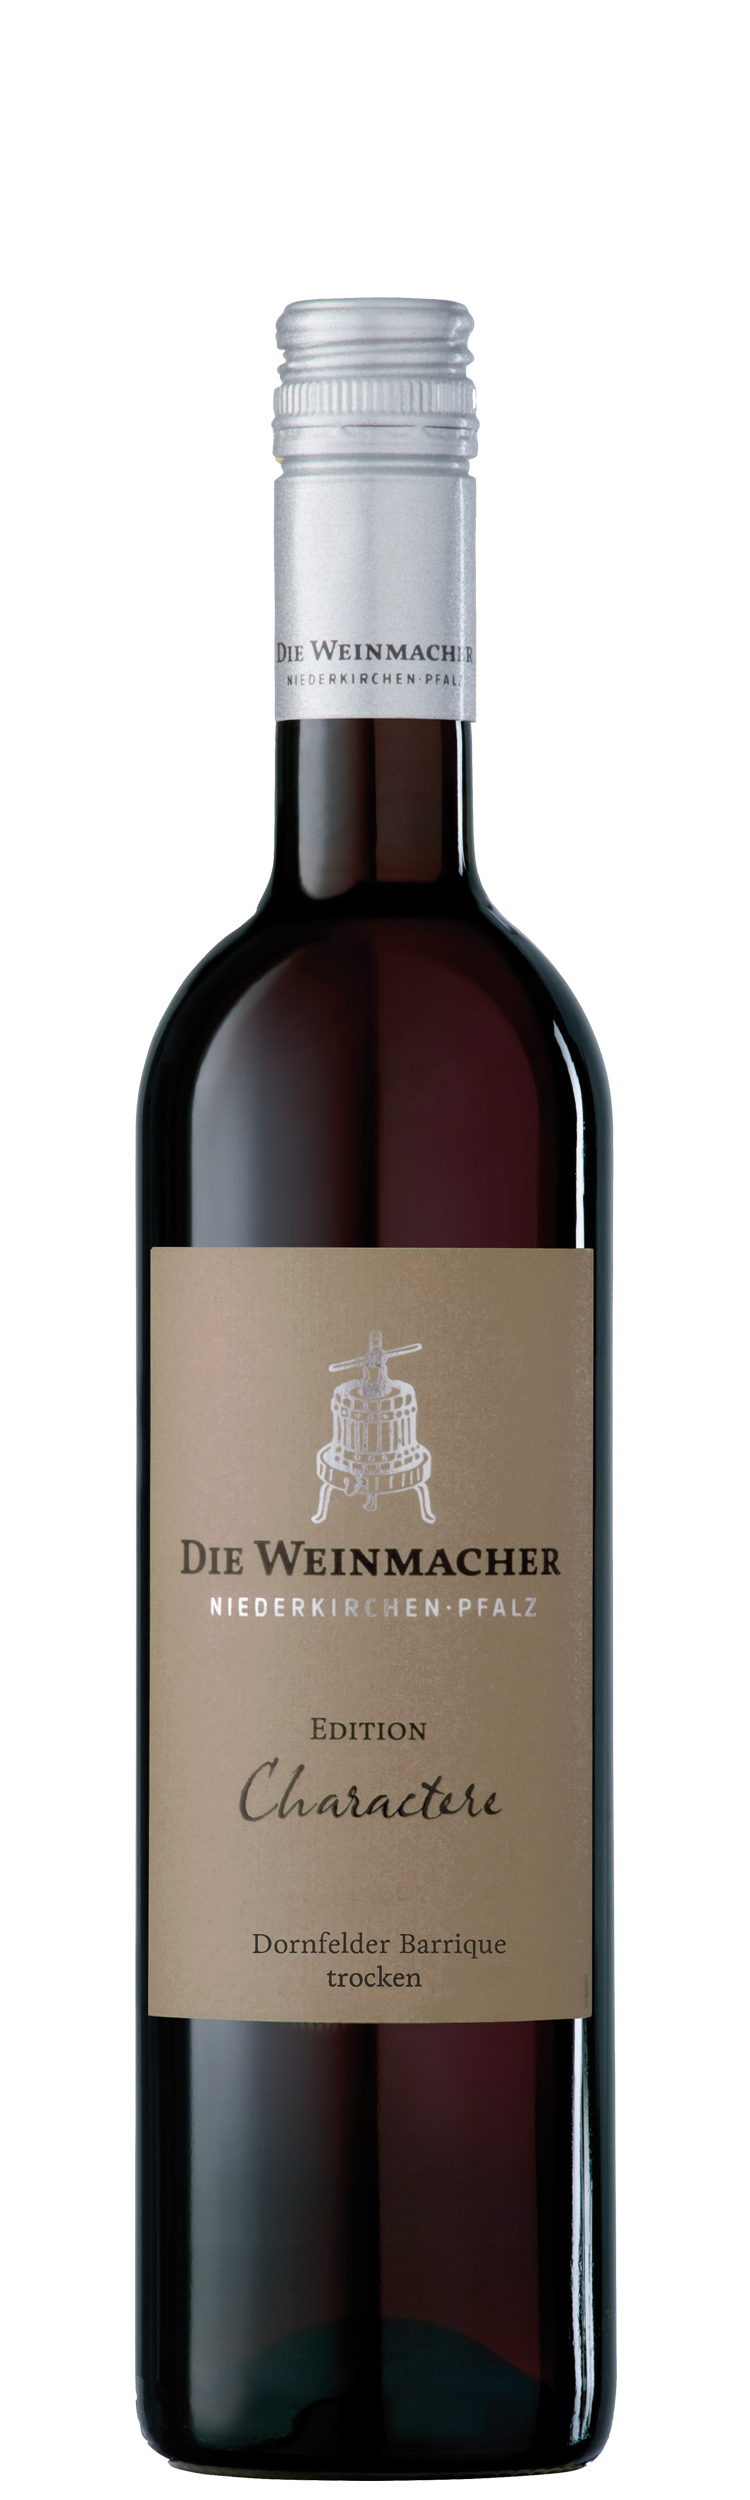 2019 CHARACTERE Dornfelder Barriquefass trocken 0,75 L - Die Weinmacher